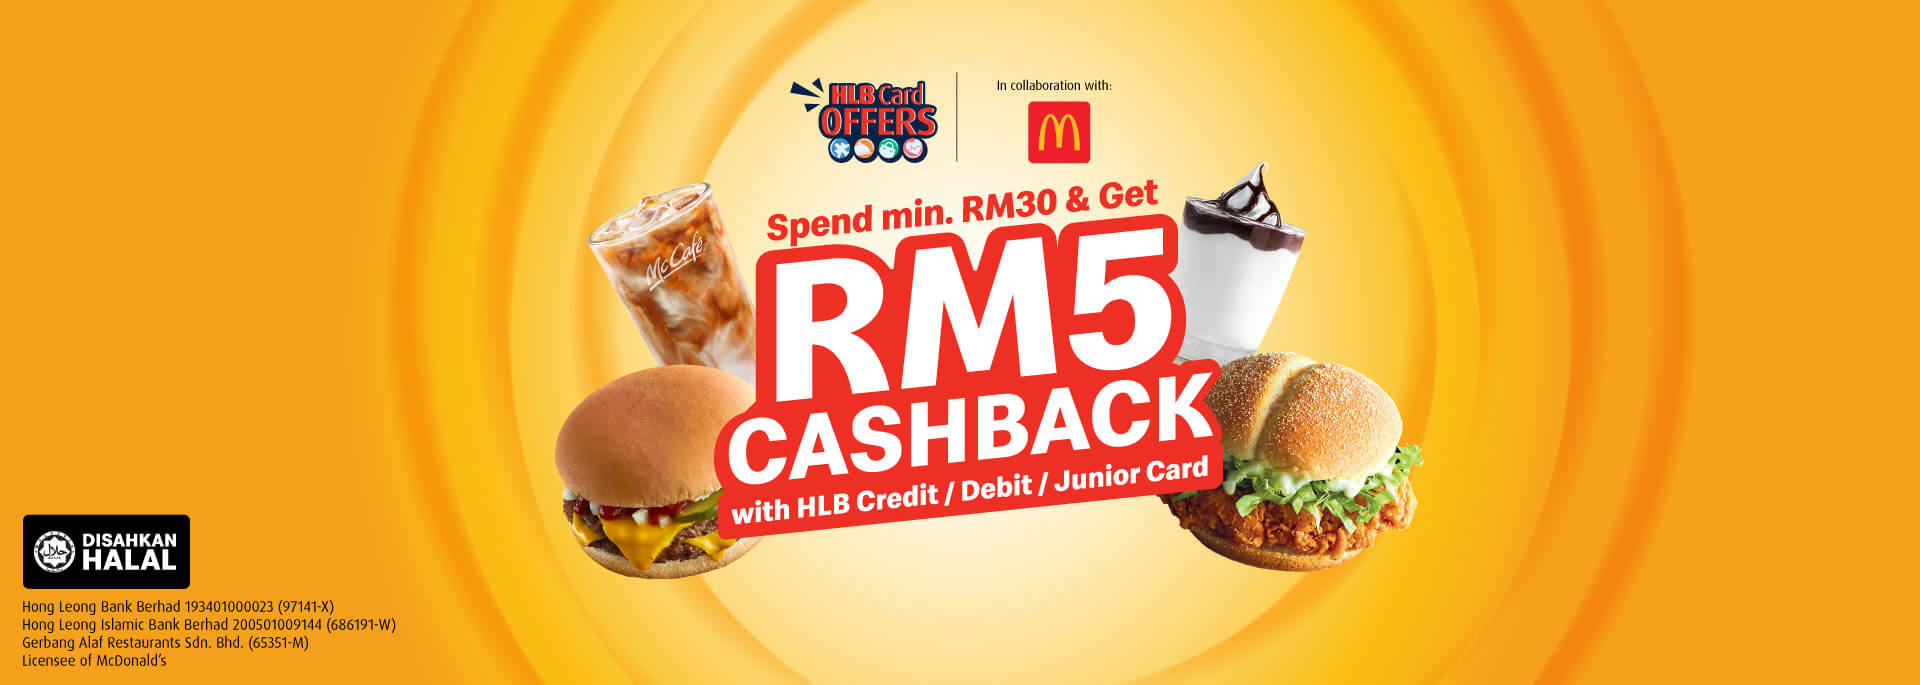 Spend min. RM30 & Get RM5 Cashback